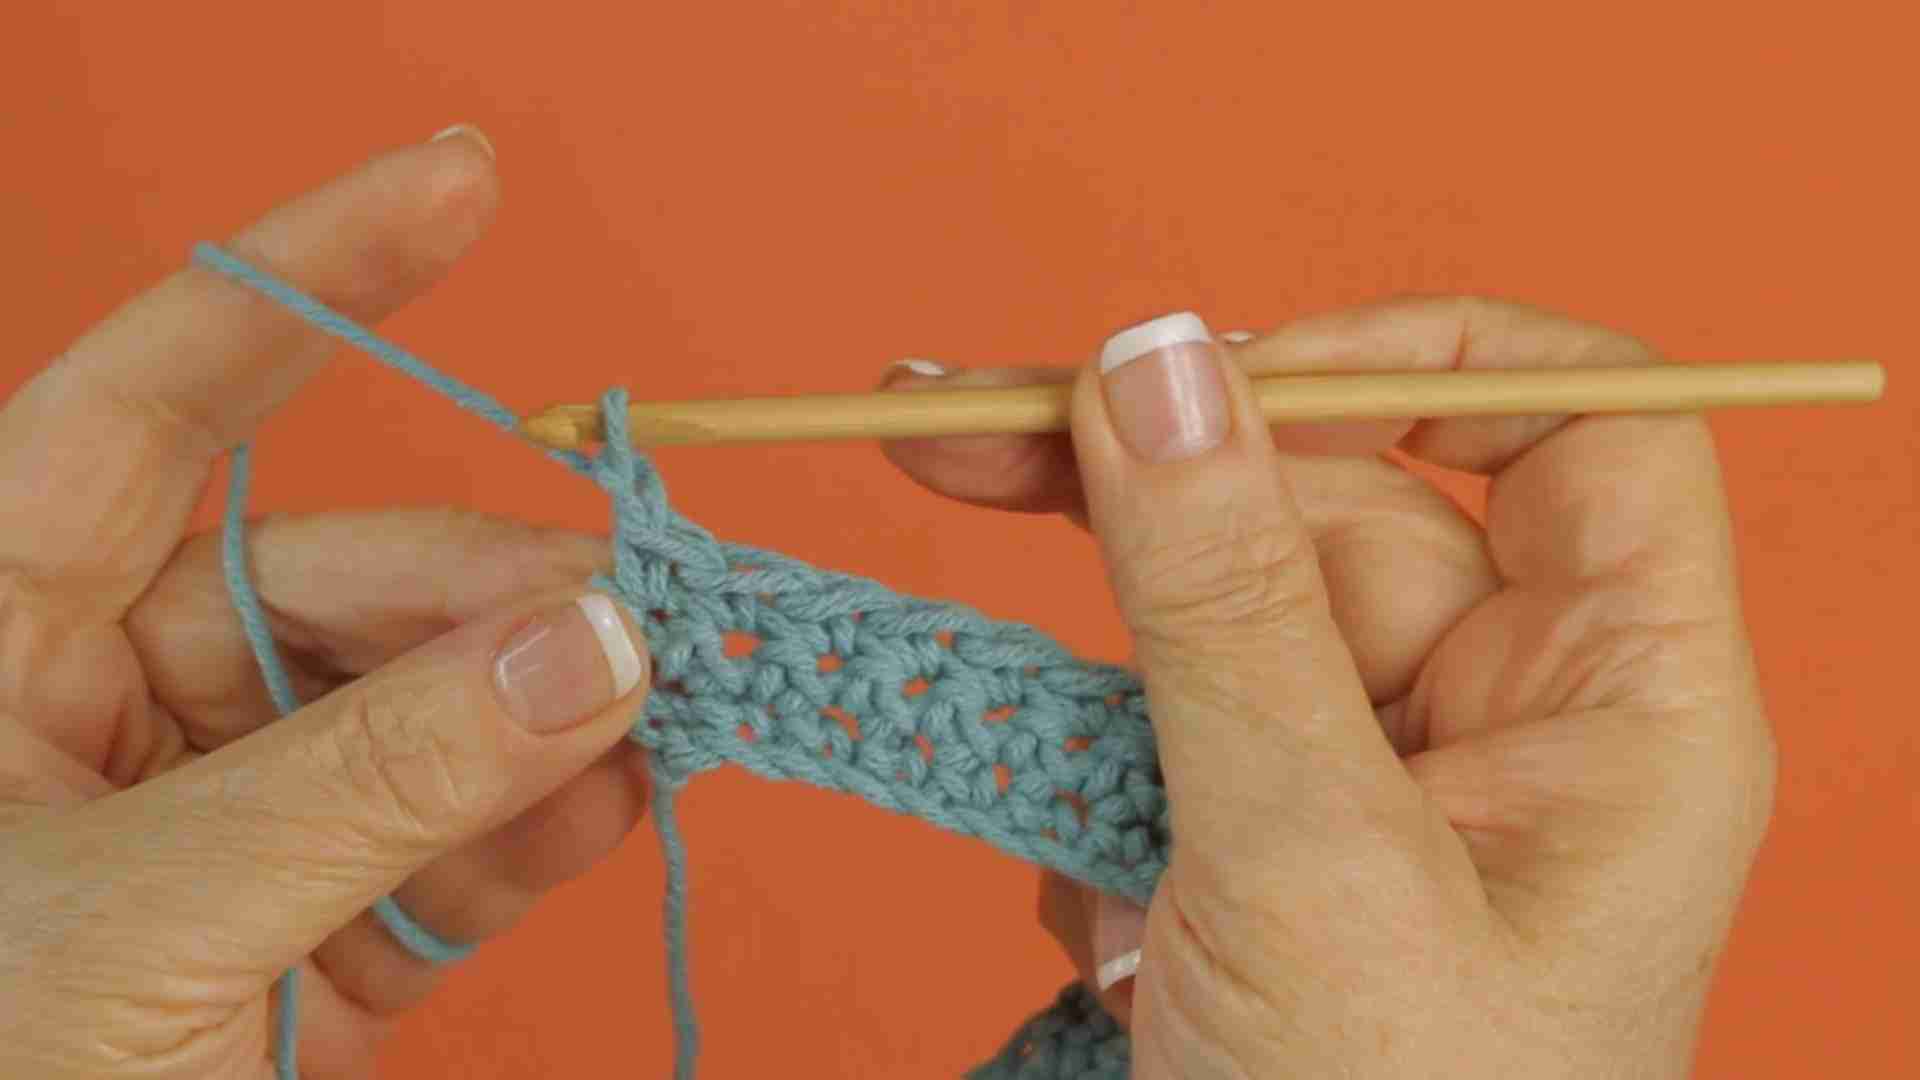 Crochet Classes Free Online - Leisure Arts (Start Crochet)